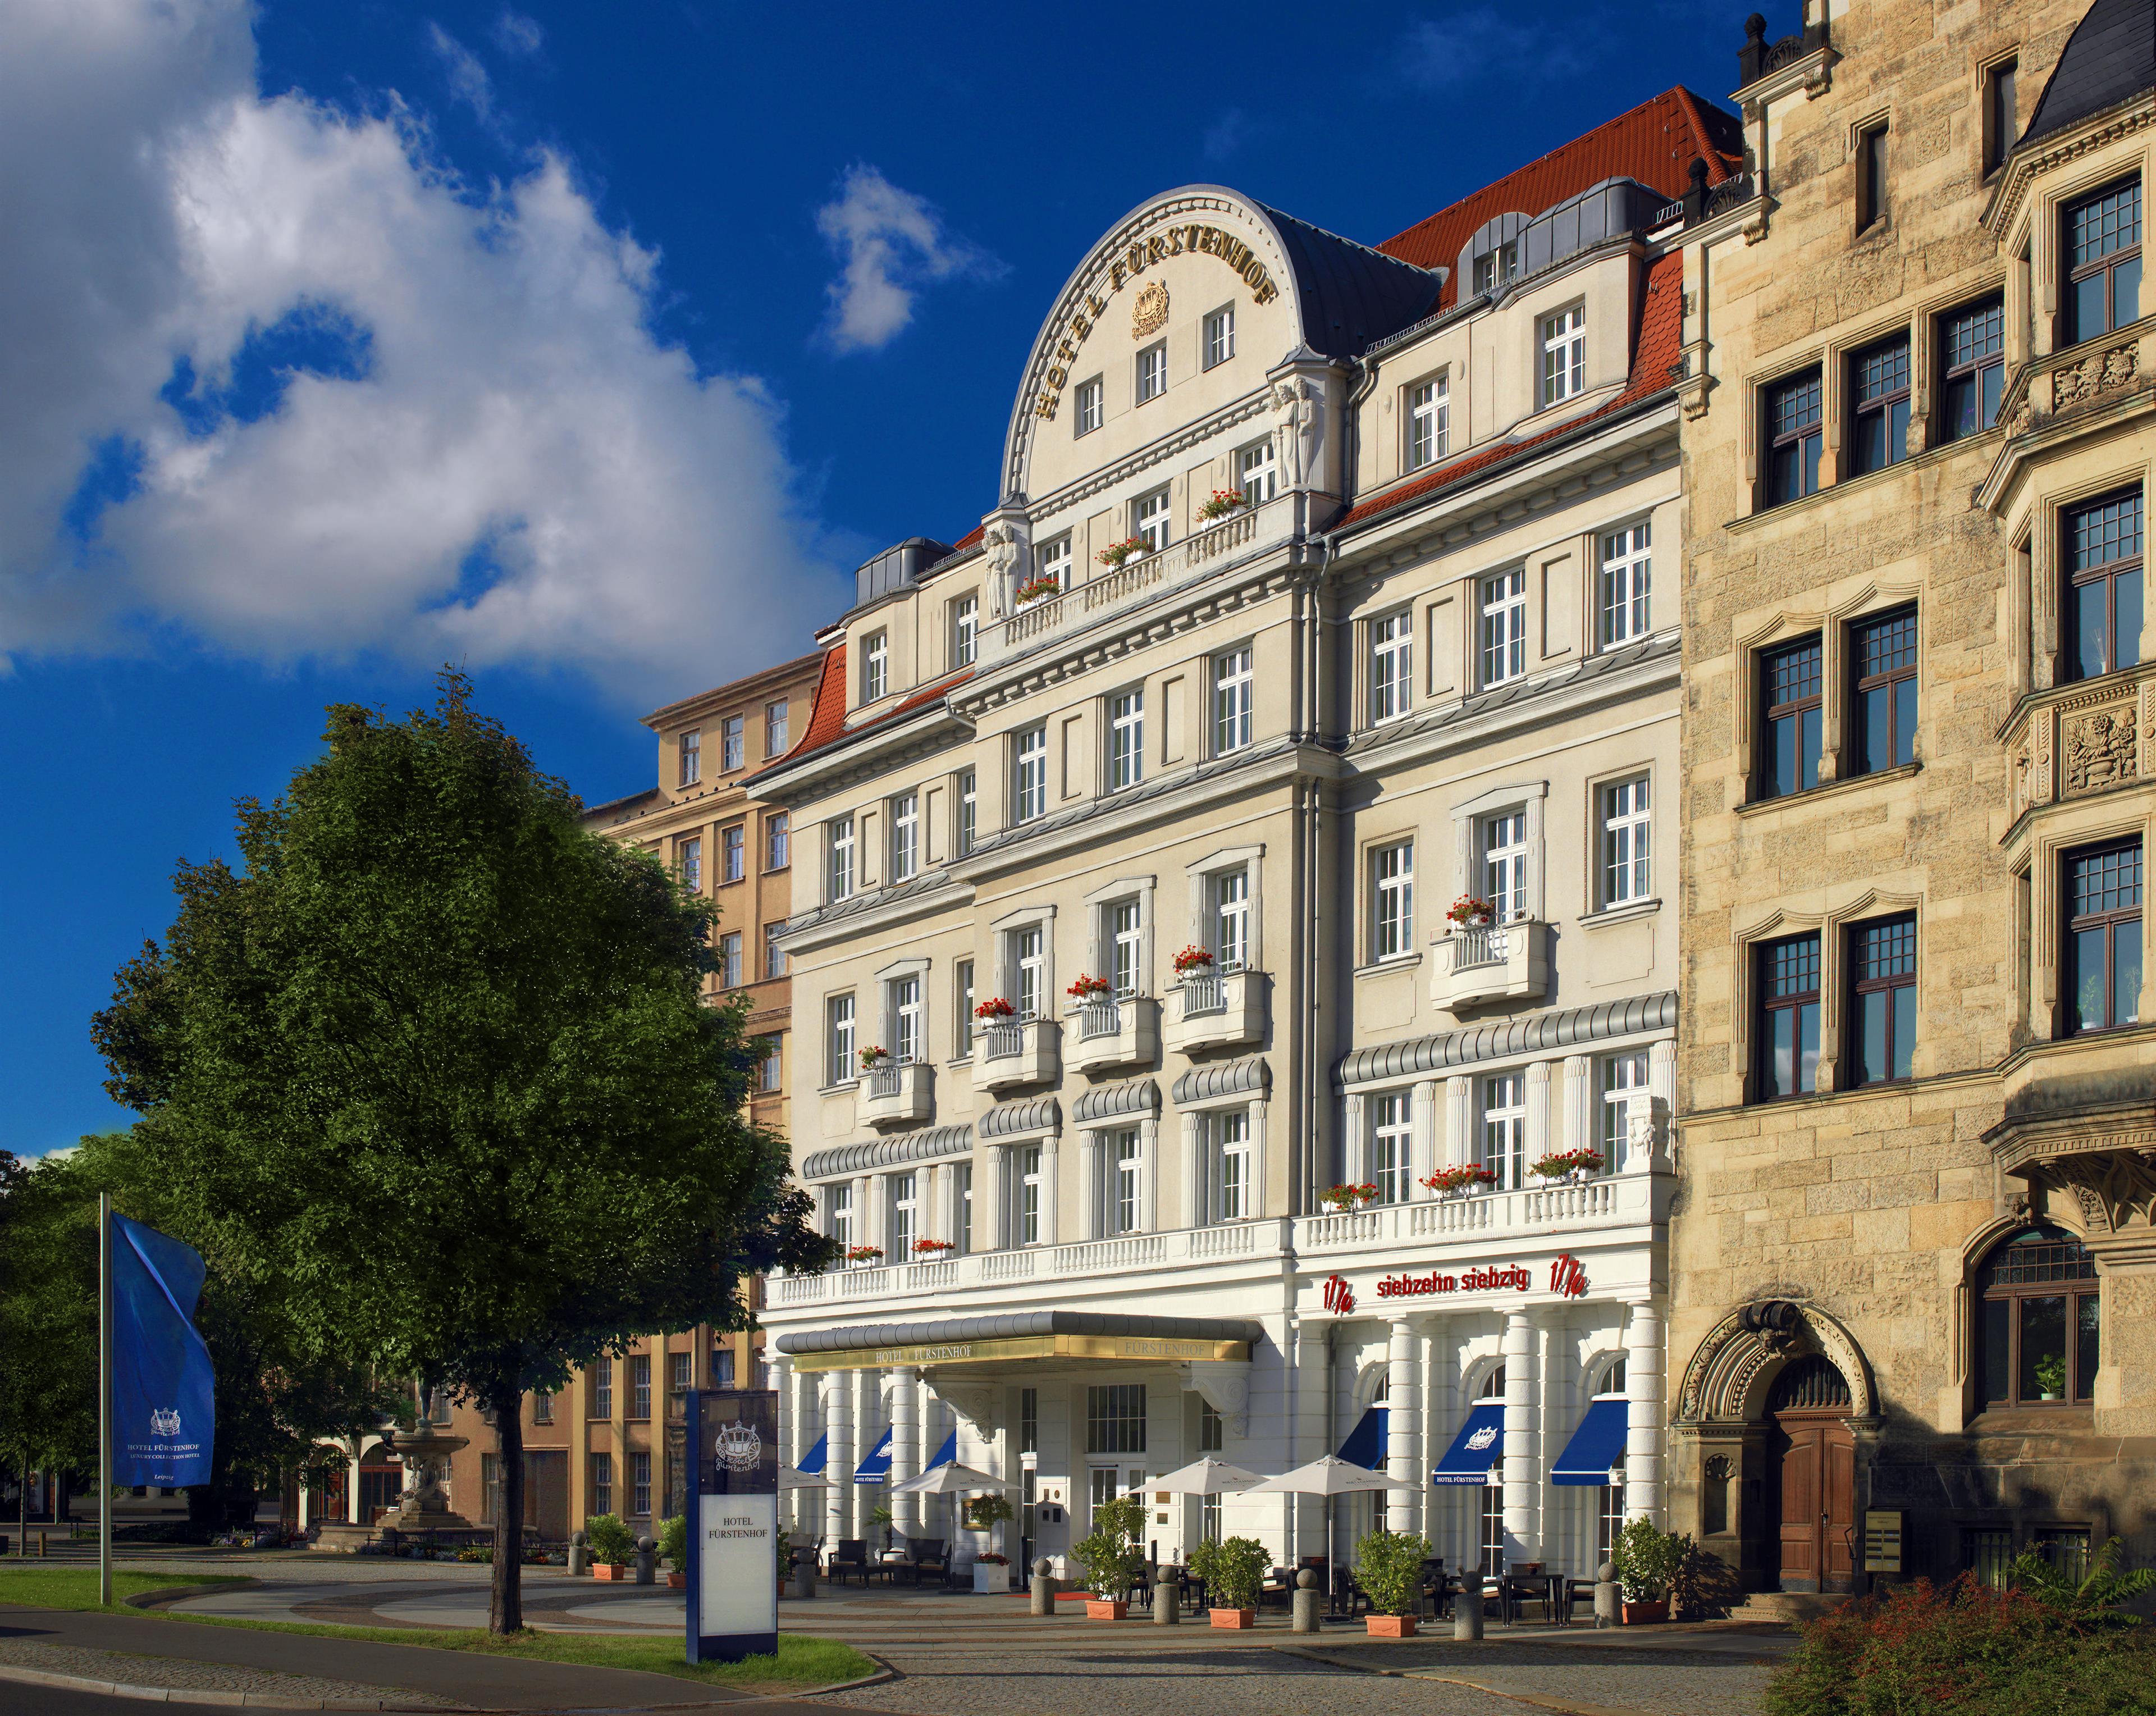 Hotel Fuerstenhof, a Luxury Collection Hotel, Leipzig - CLOSED, Troendlinring 8 in Leipzig